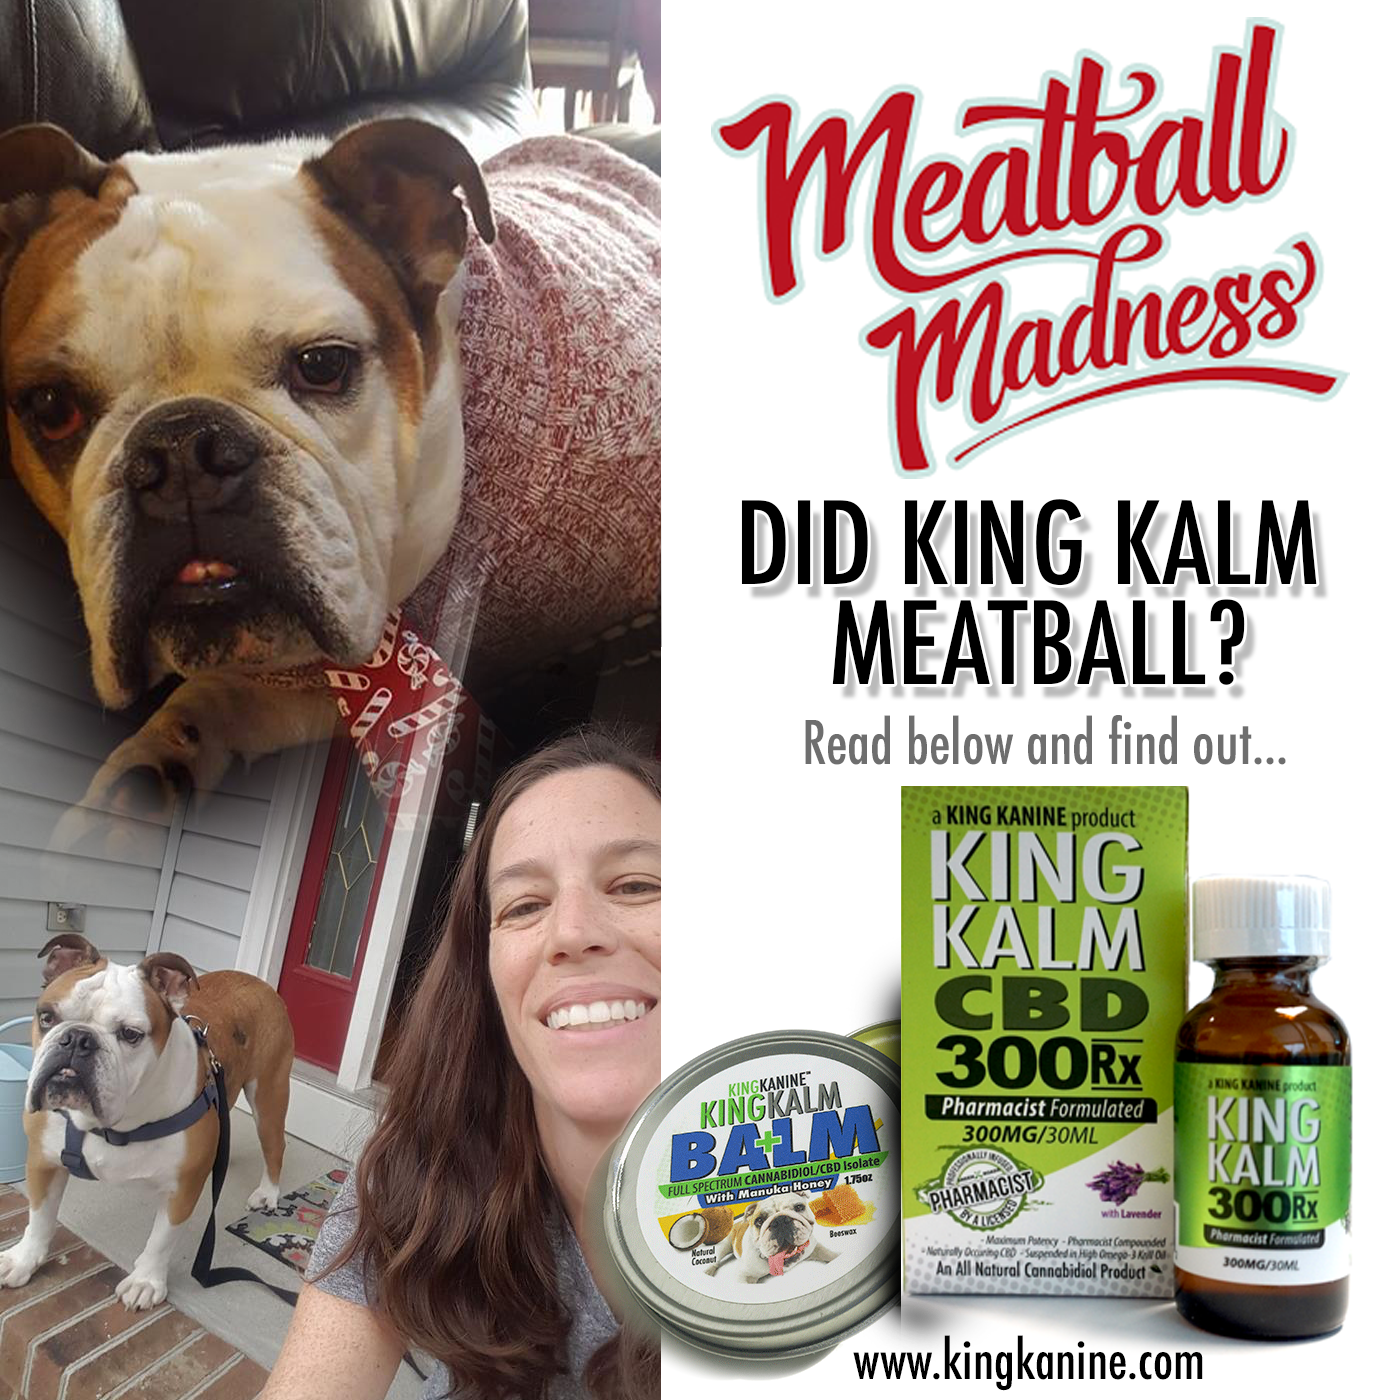 How All Natural KING KALM CBD Made a Better Meatball